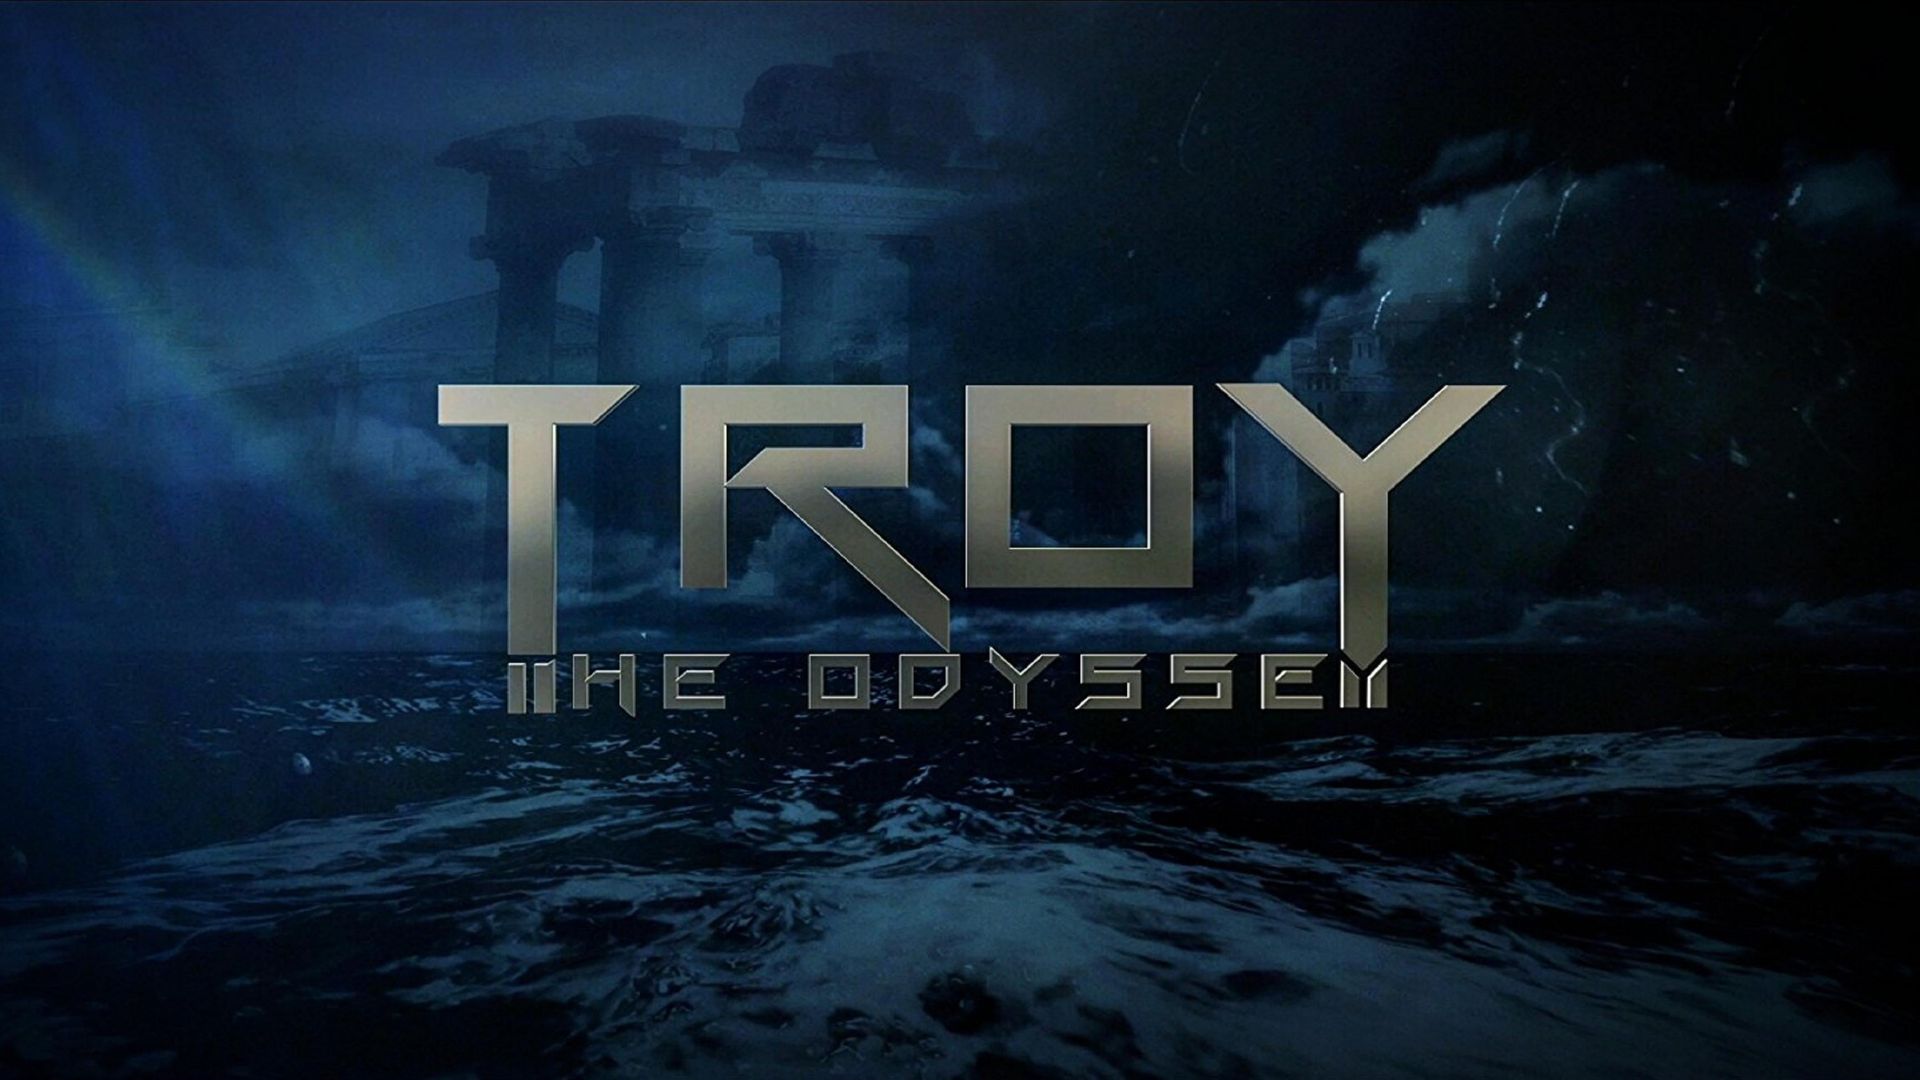 Troy the Odyssey background